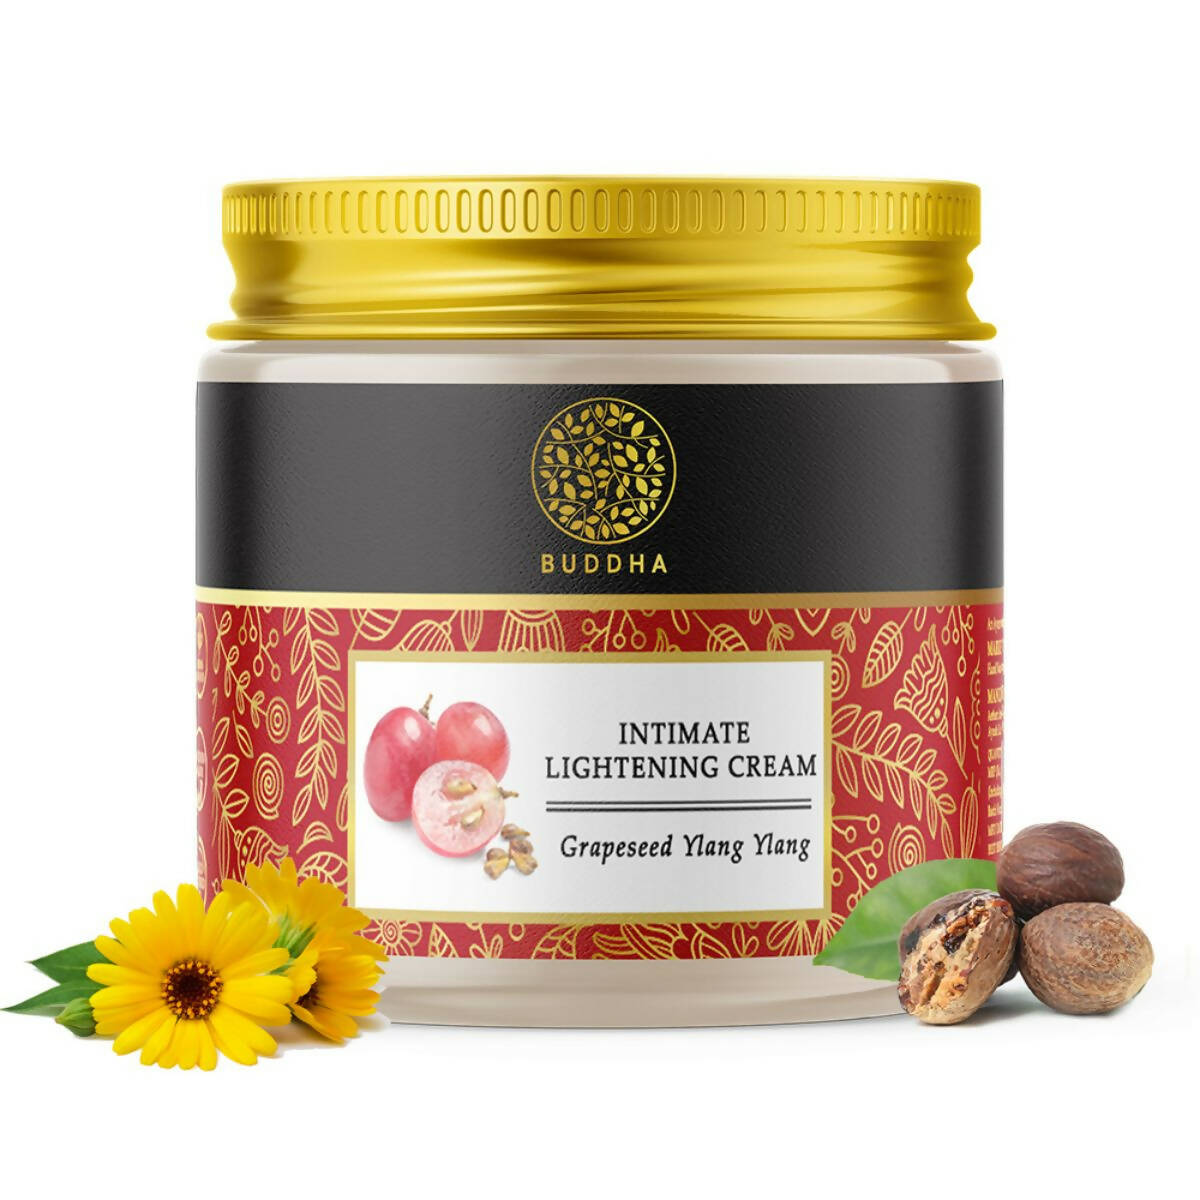 Buddha Natural Intimate Lightening Cream - for Lighten The Skin In Intimate Areas